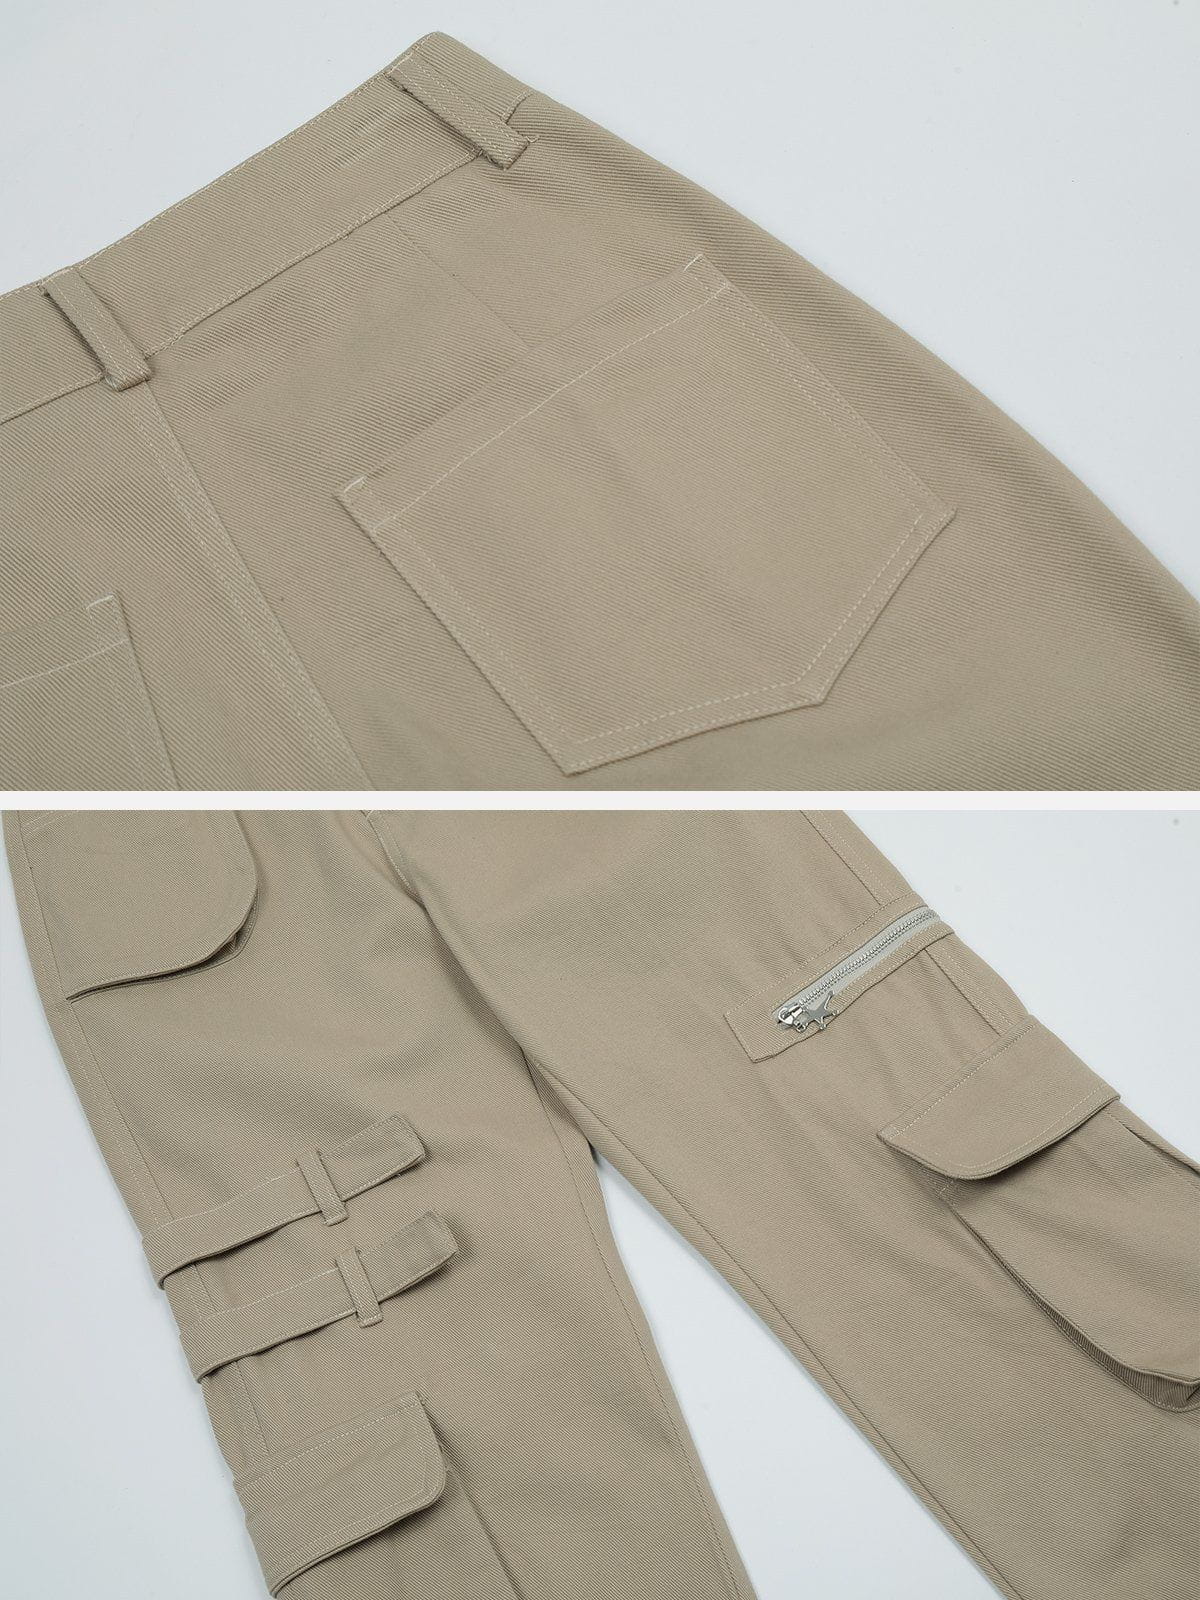 Majesda® - Multi-Pocket Zippered Cargo Pants outfit ideas streetwear fashion